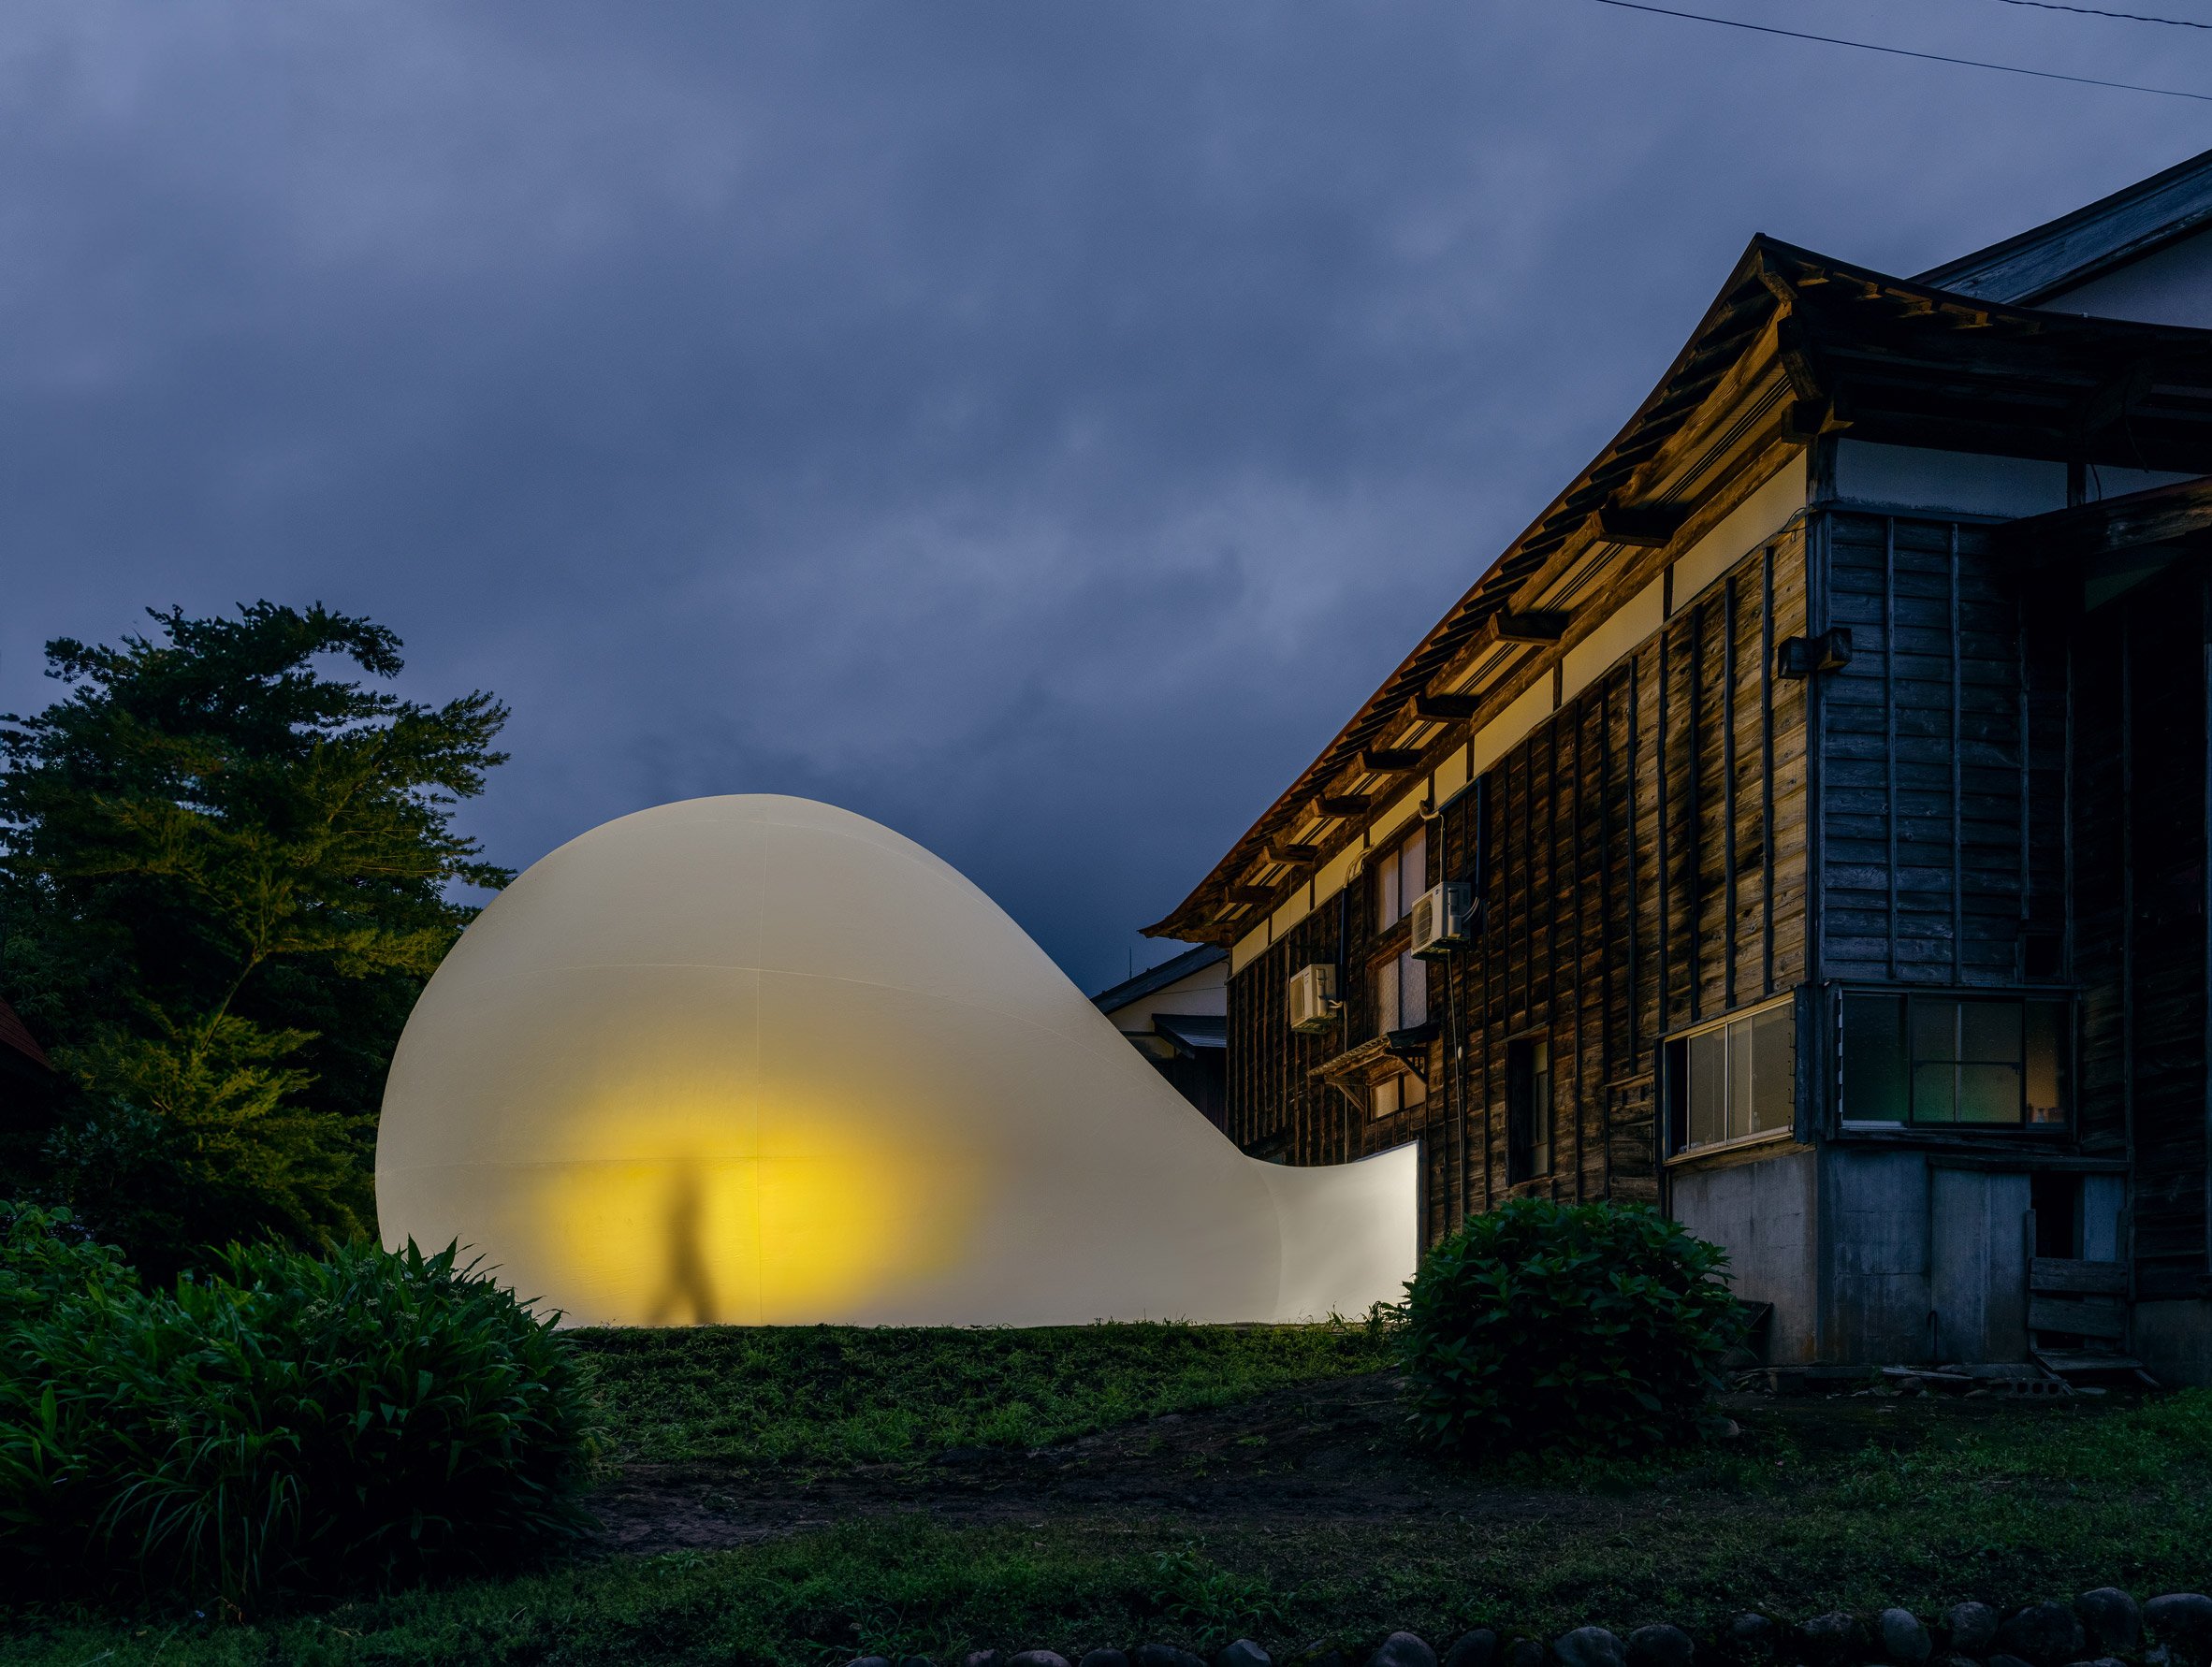 A giant lit-up bubble outside a Japanese house